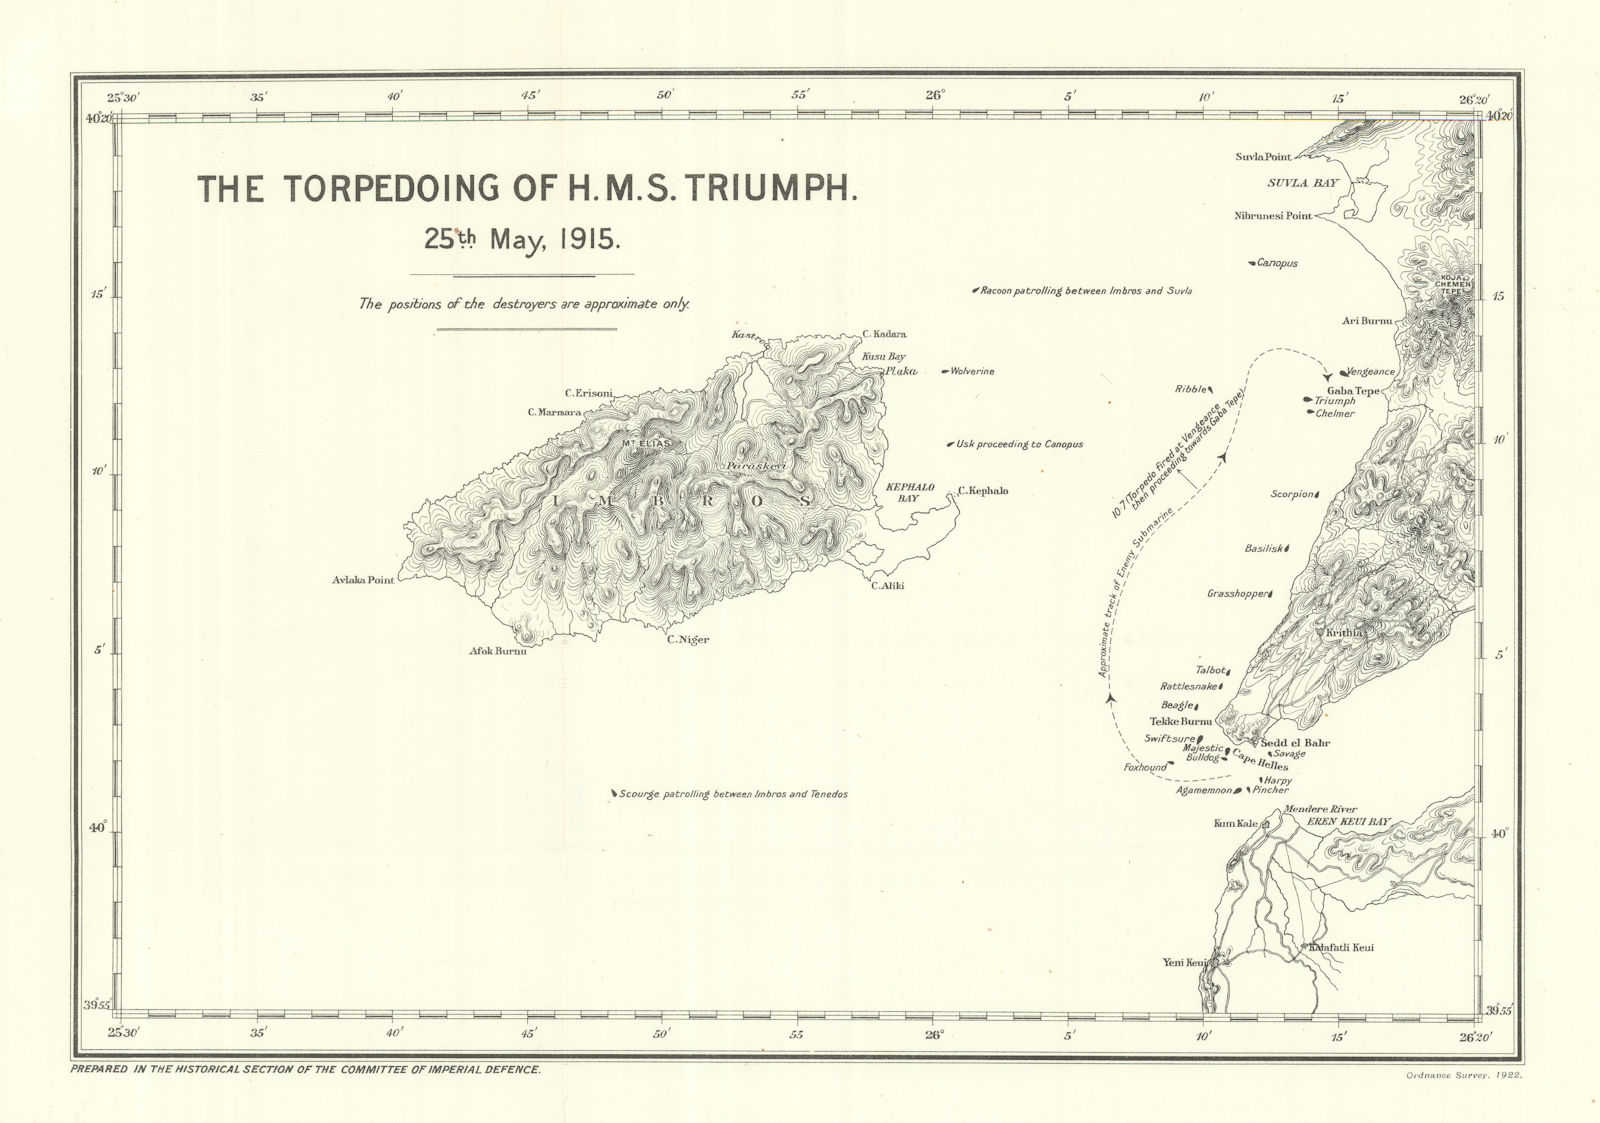 HMS Triumph torpedoing. 25th May, 1915. Gallipoli Campaign. Gokceada 1923 map